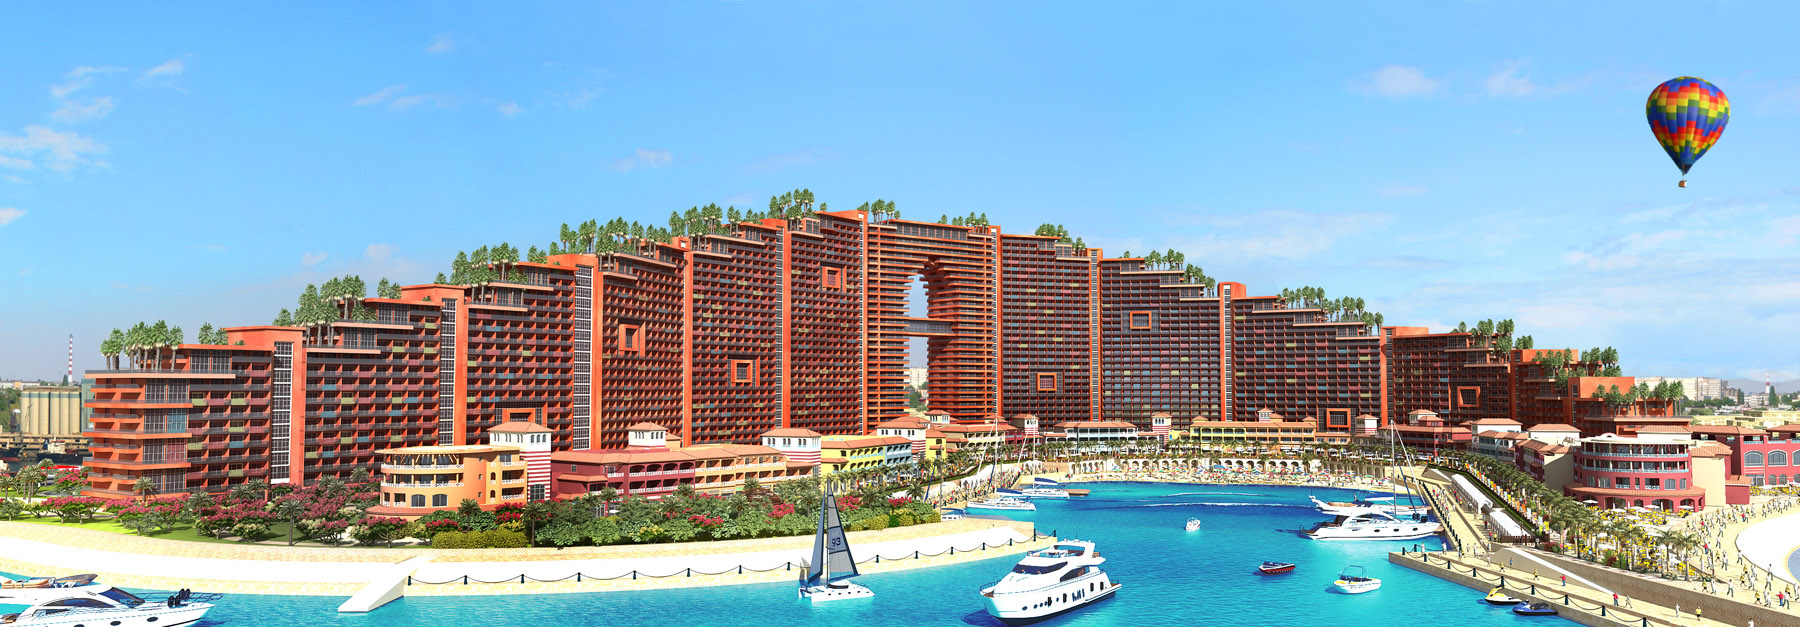 Egypt's Amer group wins approval to start building resort in Jordan